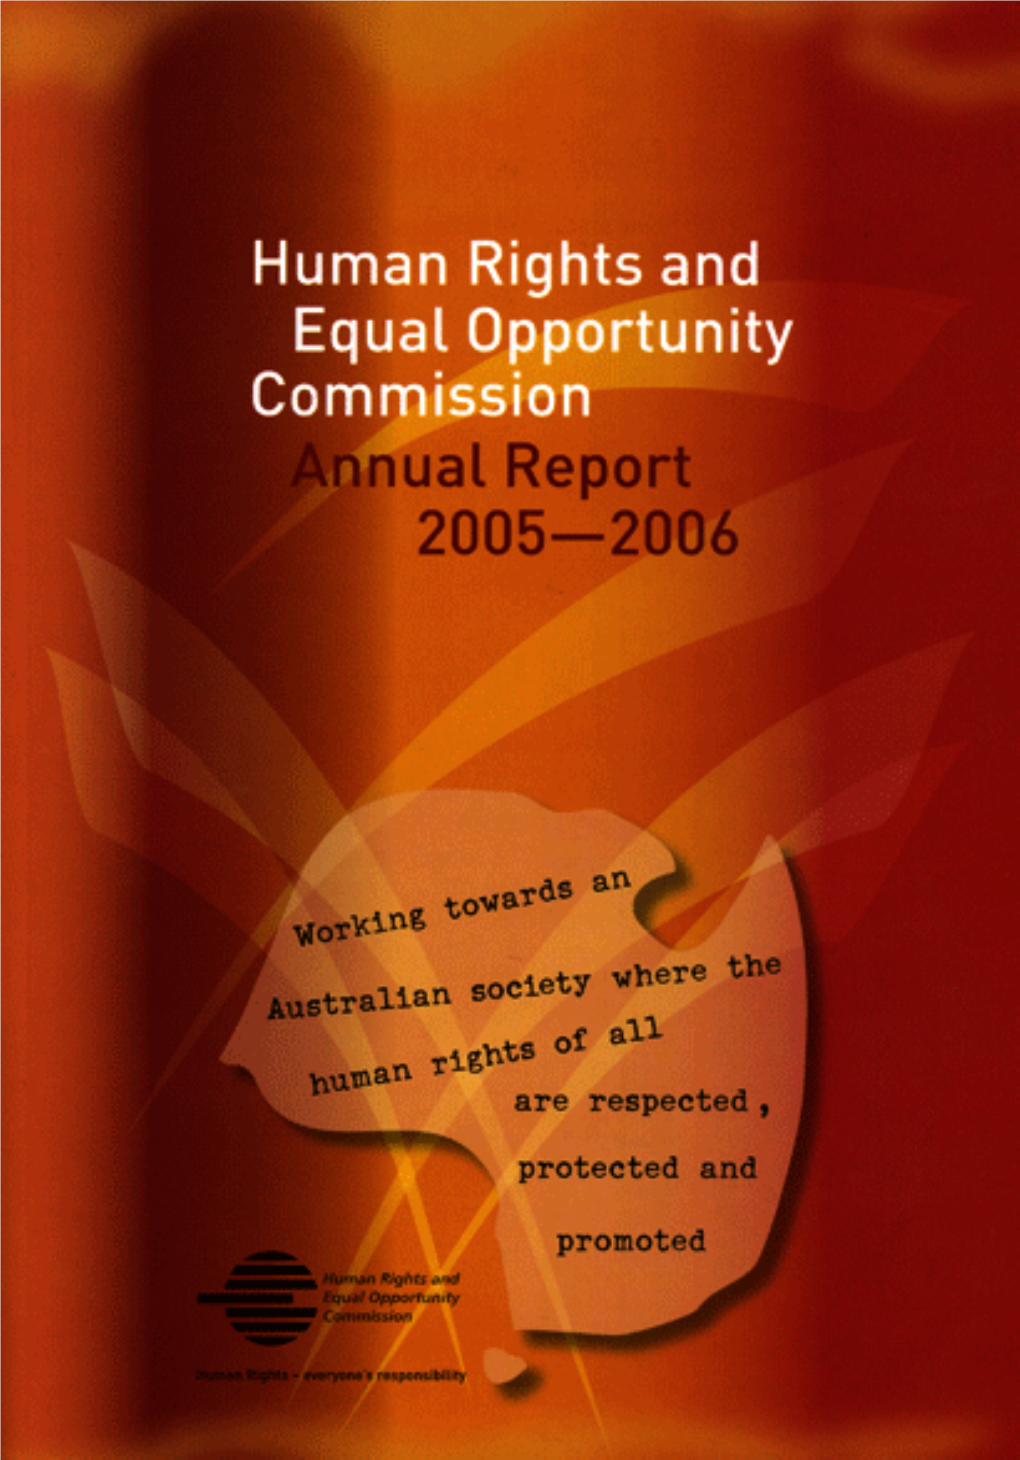 HREOC Annual Report 2005-06.Indb